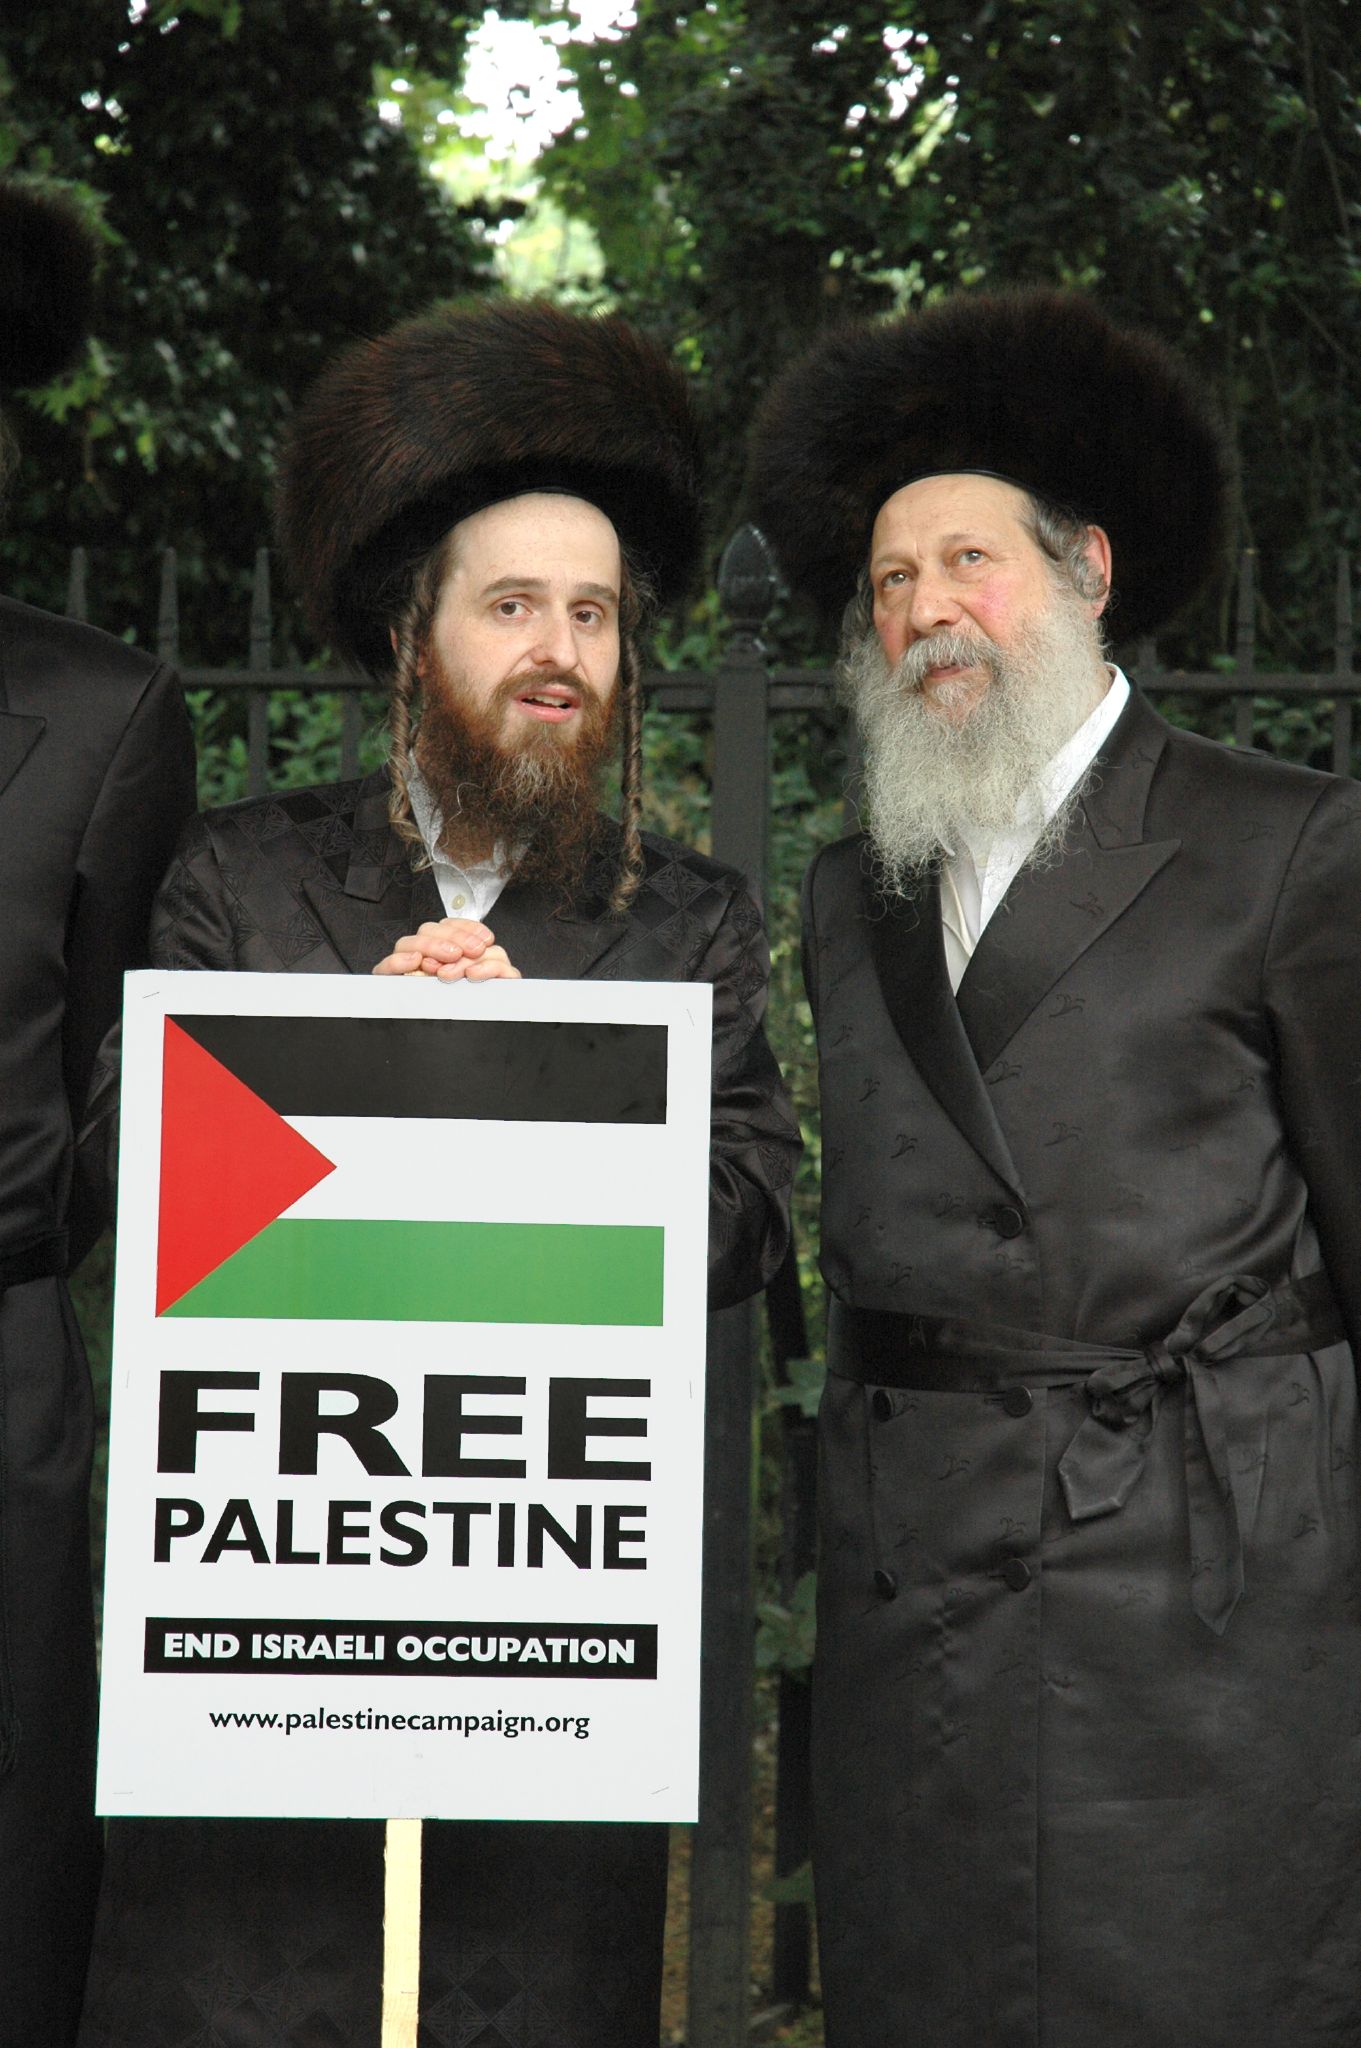 http://upload.wikimedia.org/wikipedia/commons/e/ef/Members_of_Neturei_Karta_Orthodox_Jewish_group_protest_against_Israel_2.jpg